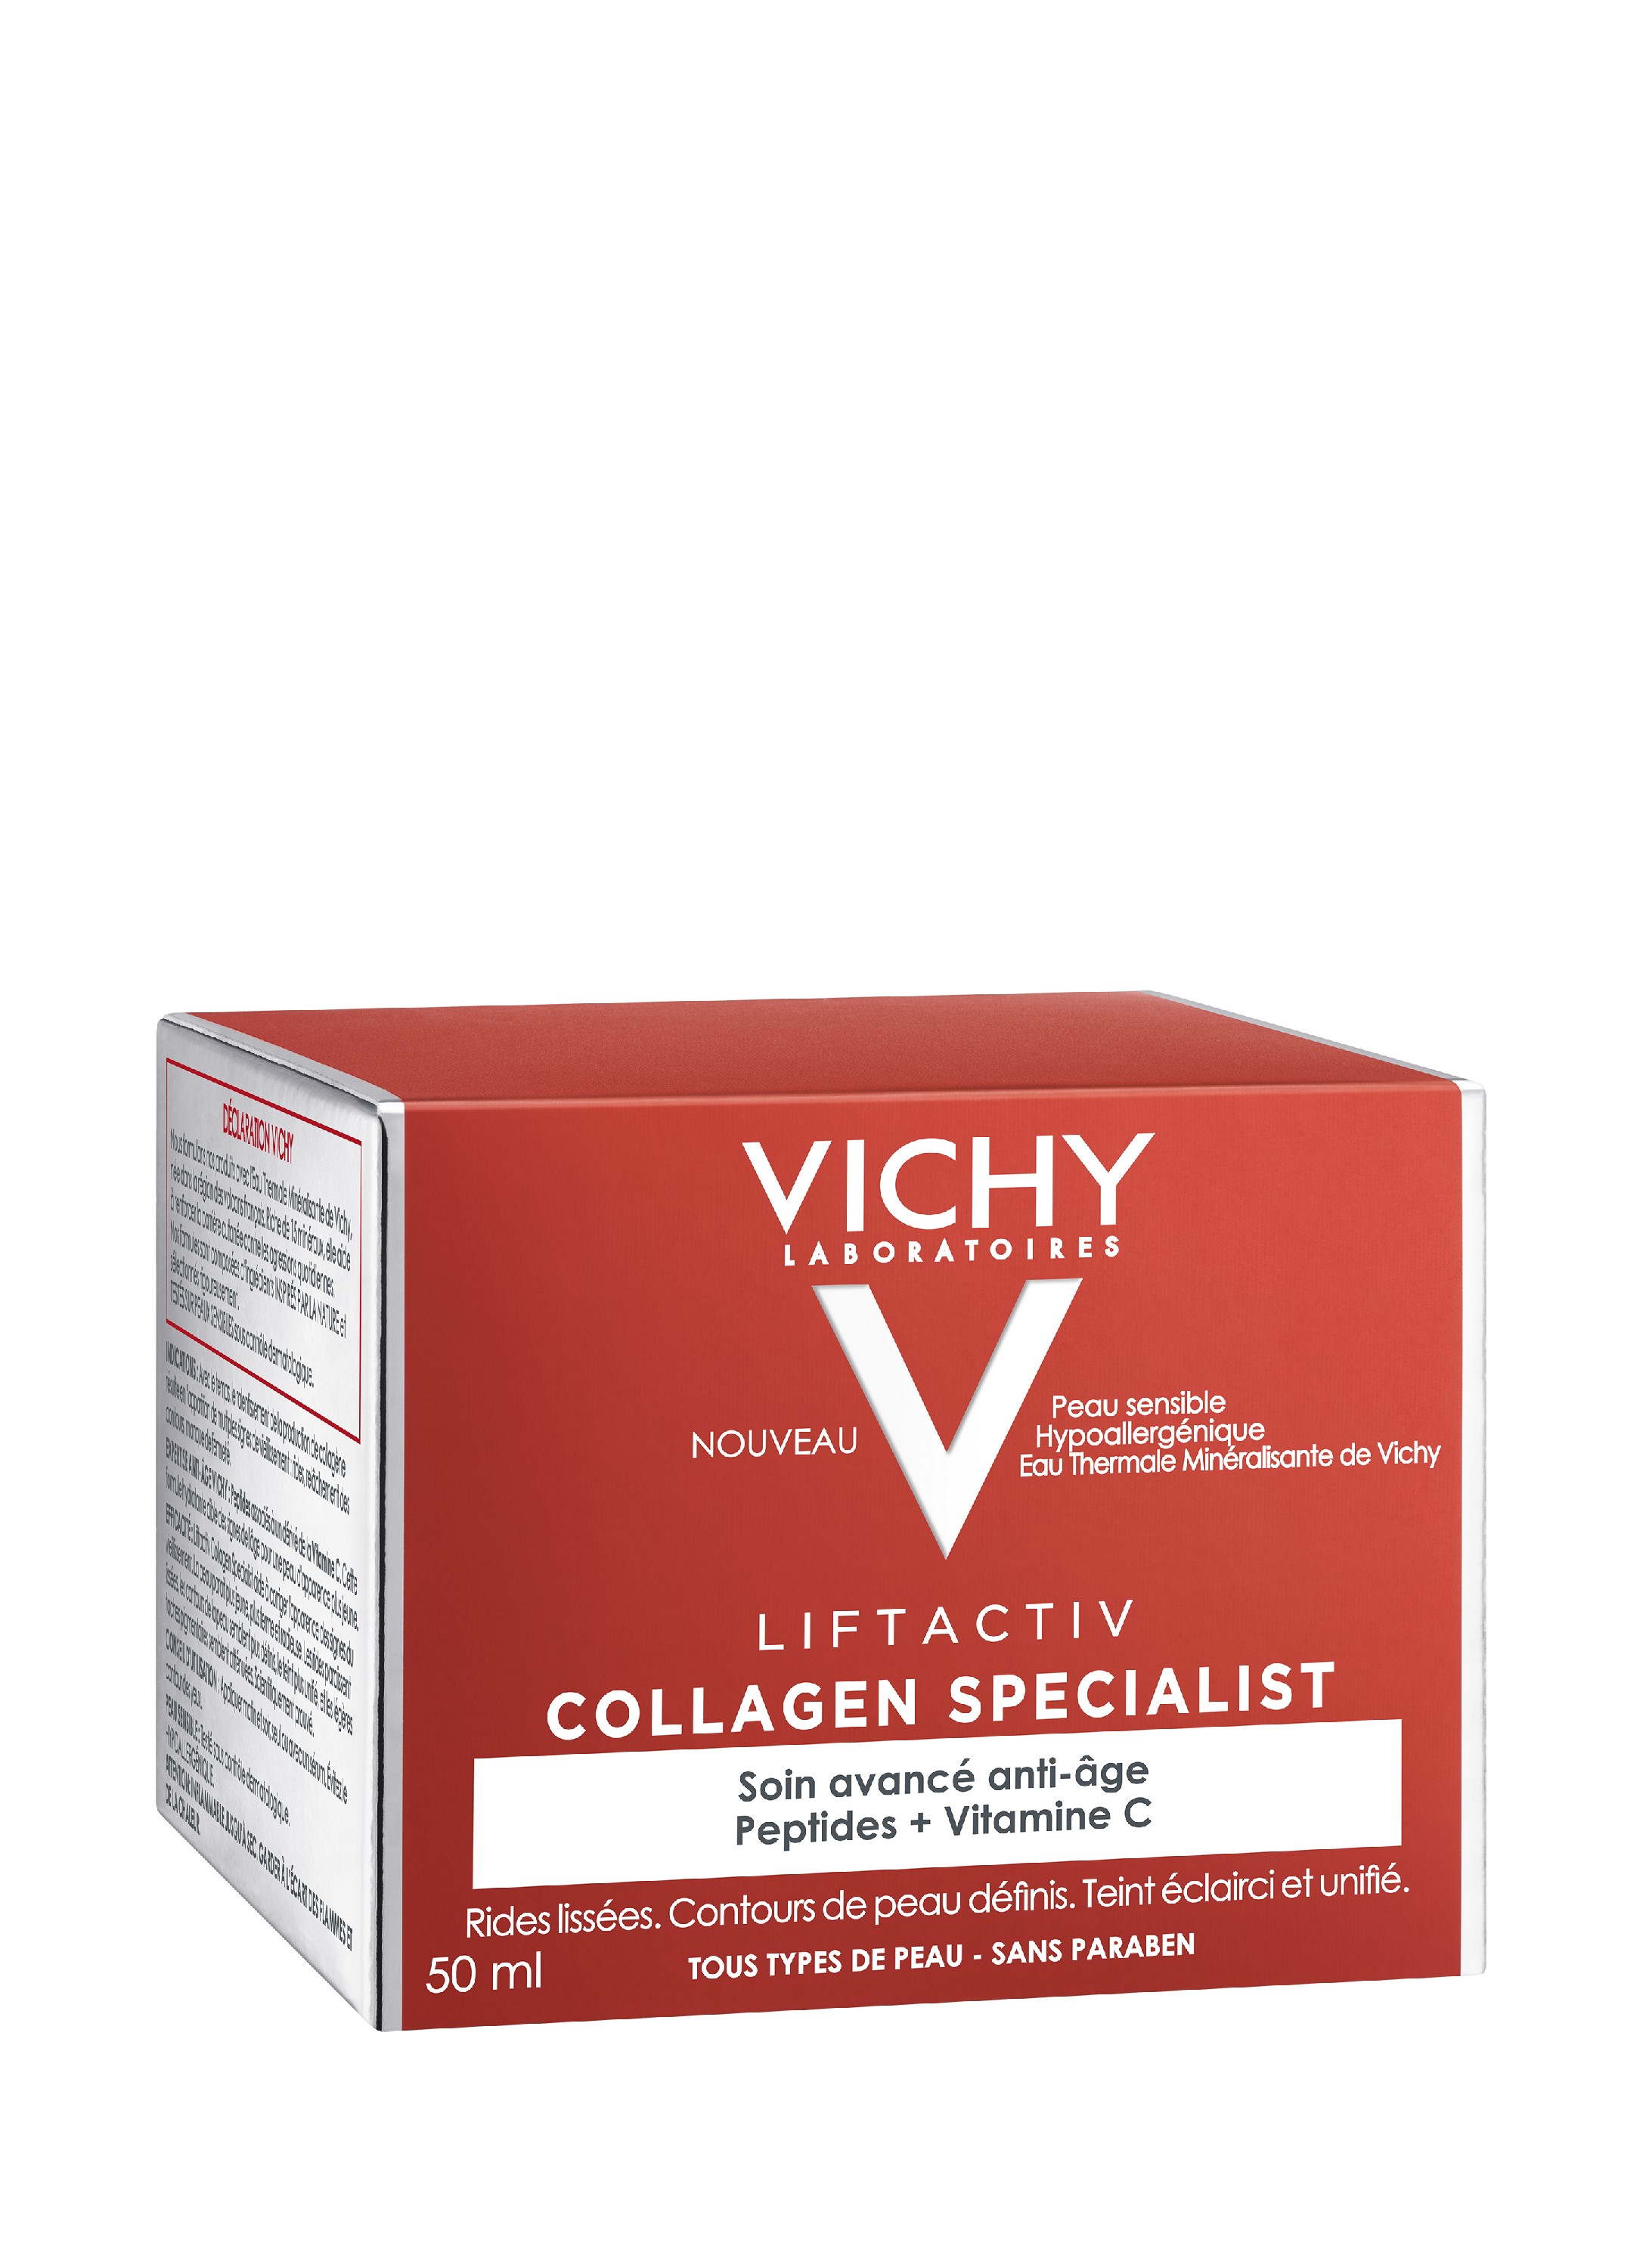 Vichy Liftactiv Collagen Specialist arckrm